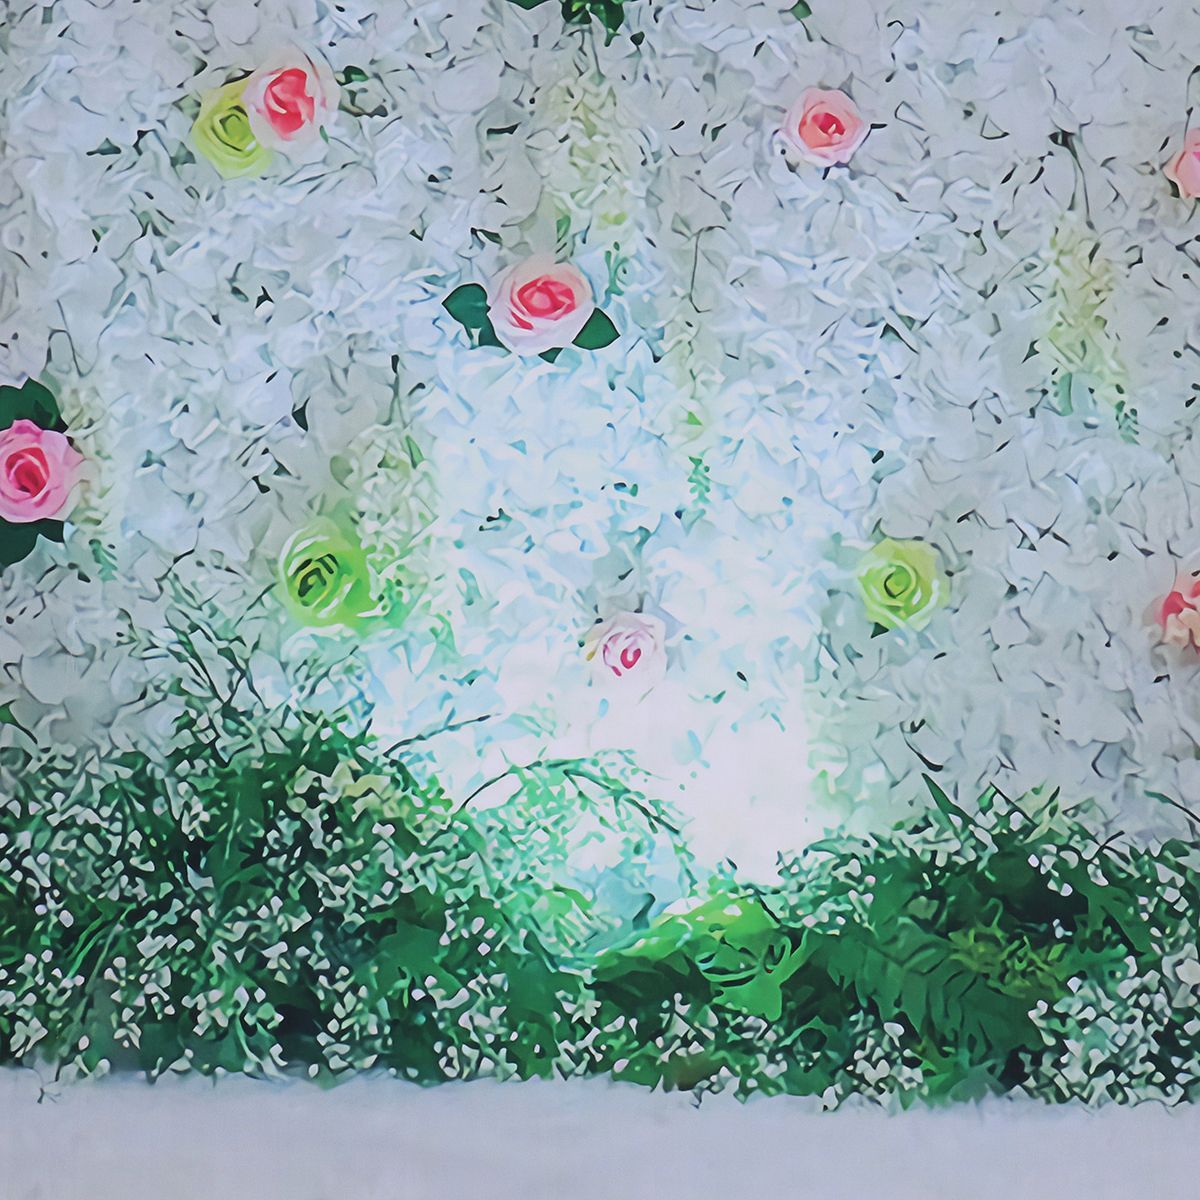 Flower-Wall-Floor-Backdrop-Photography-Photo-Background-Studio-Props-Wedding-1723858